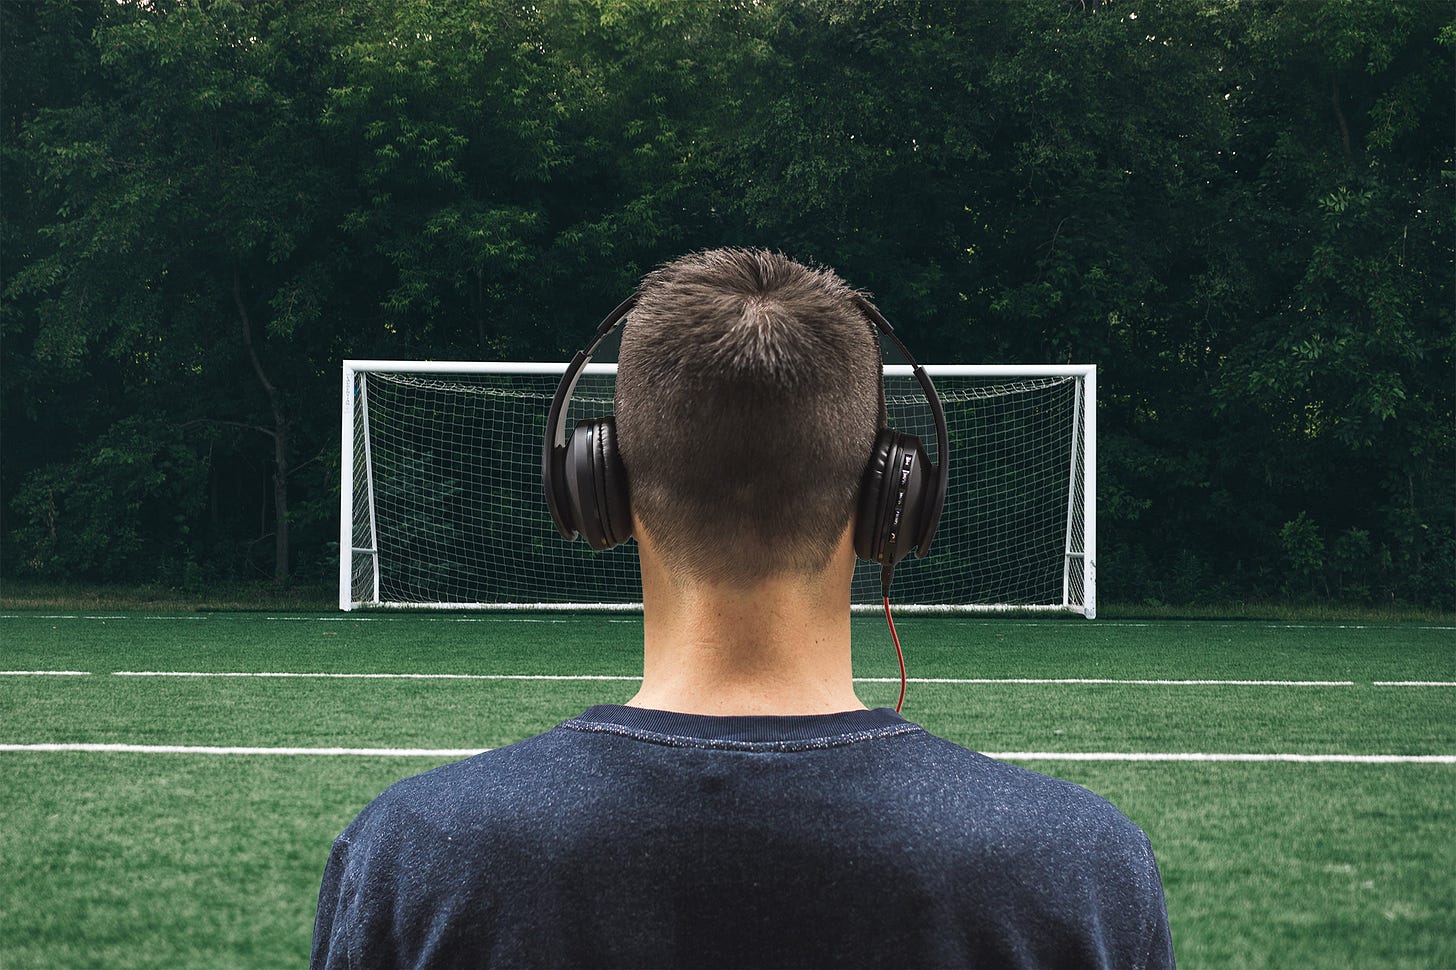 man wearing headphones facing soccer goal